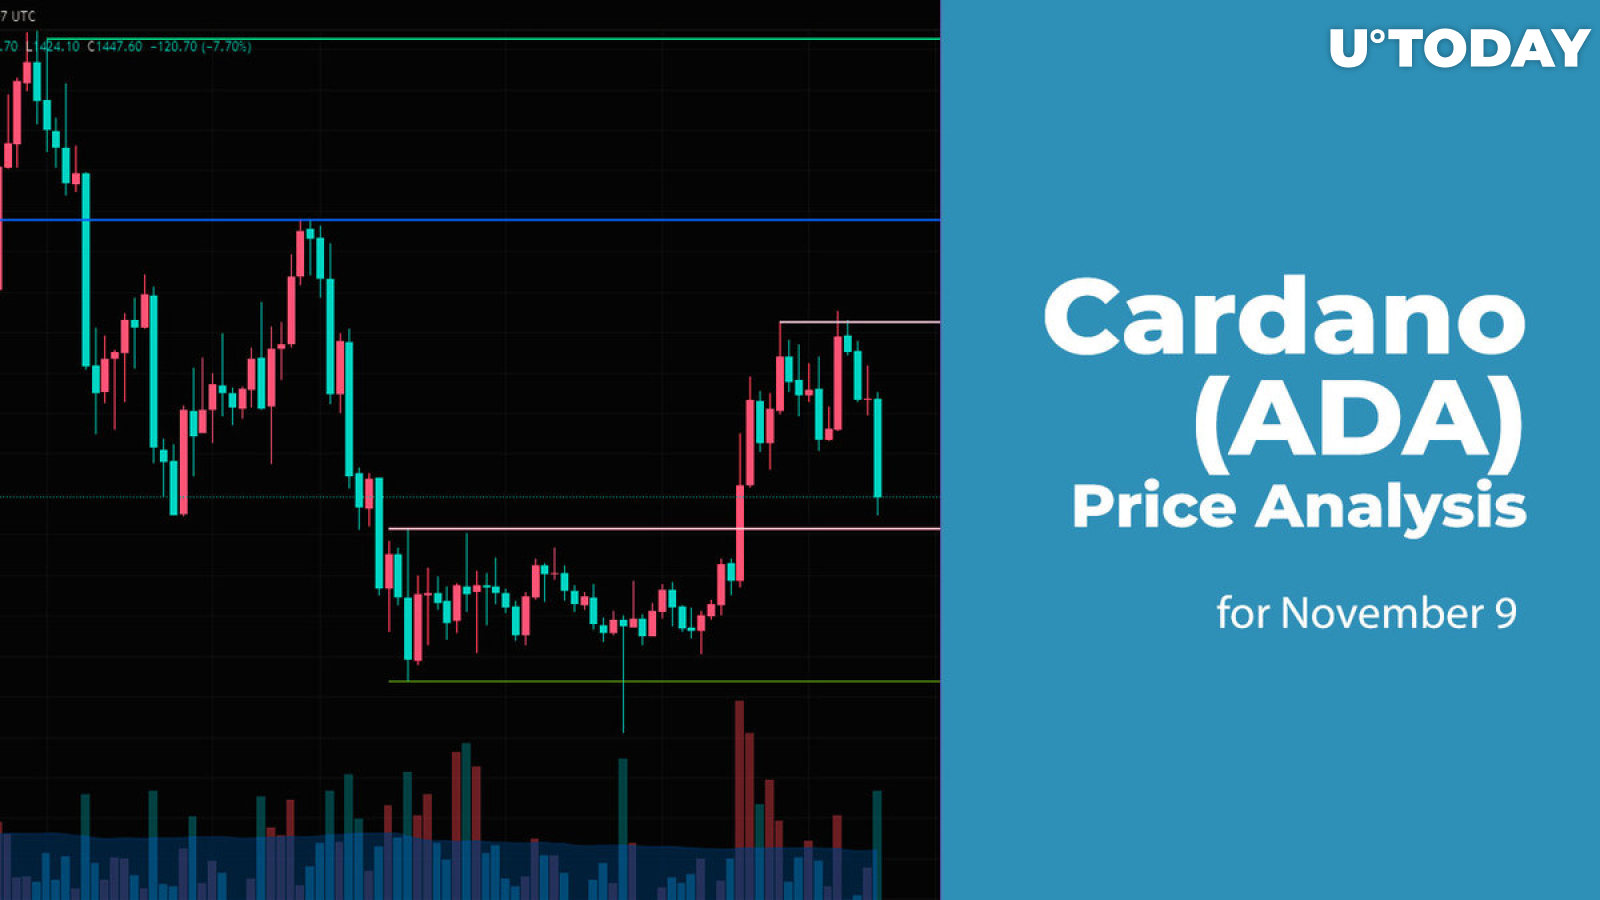 Cardano (ADA) Price Analysis for November 9